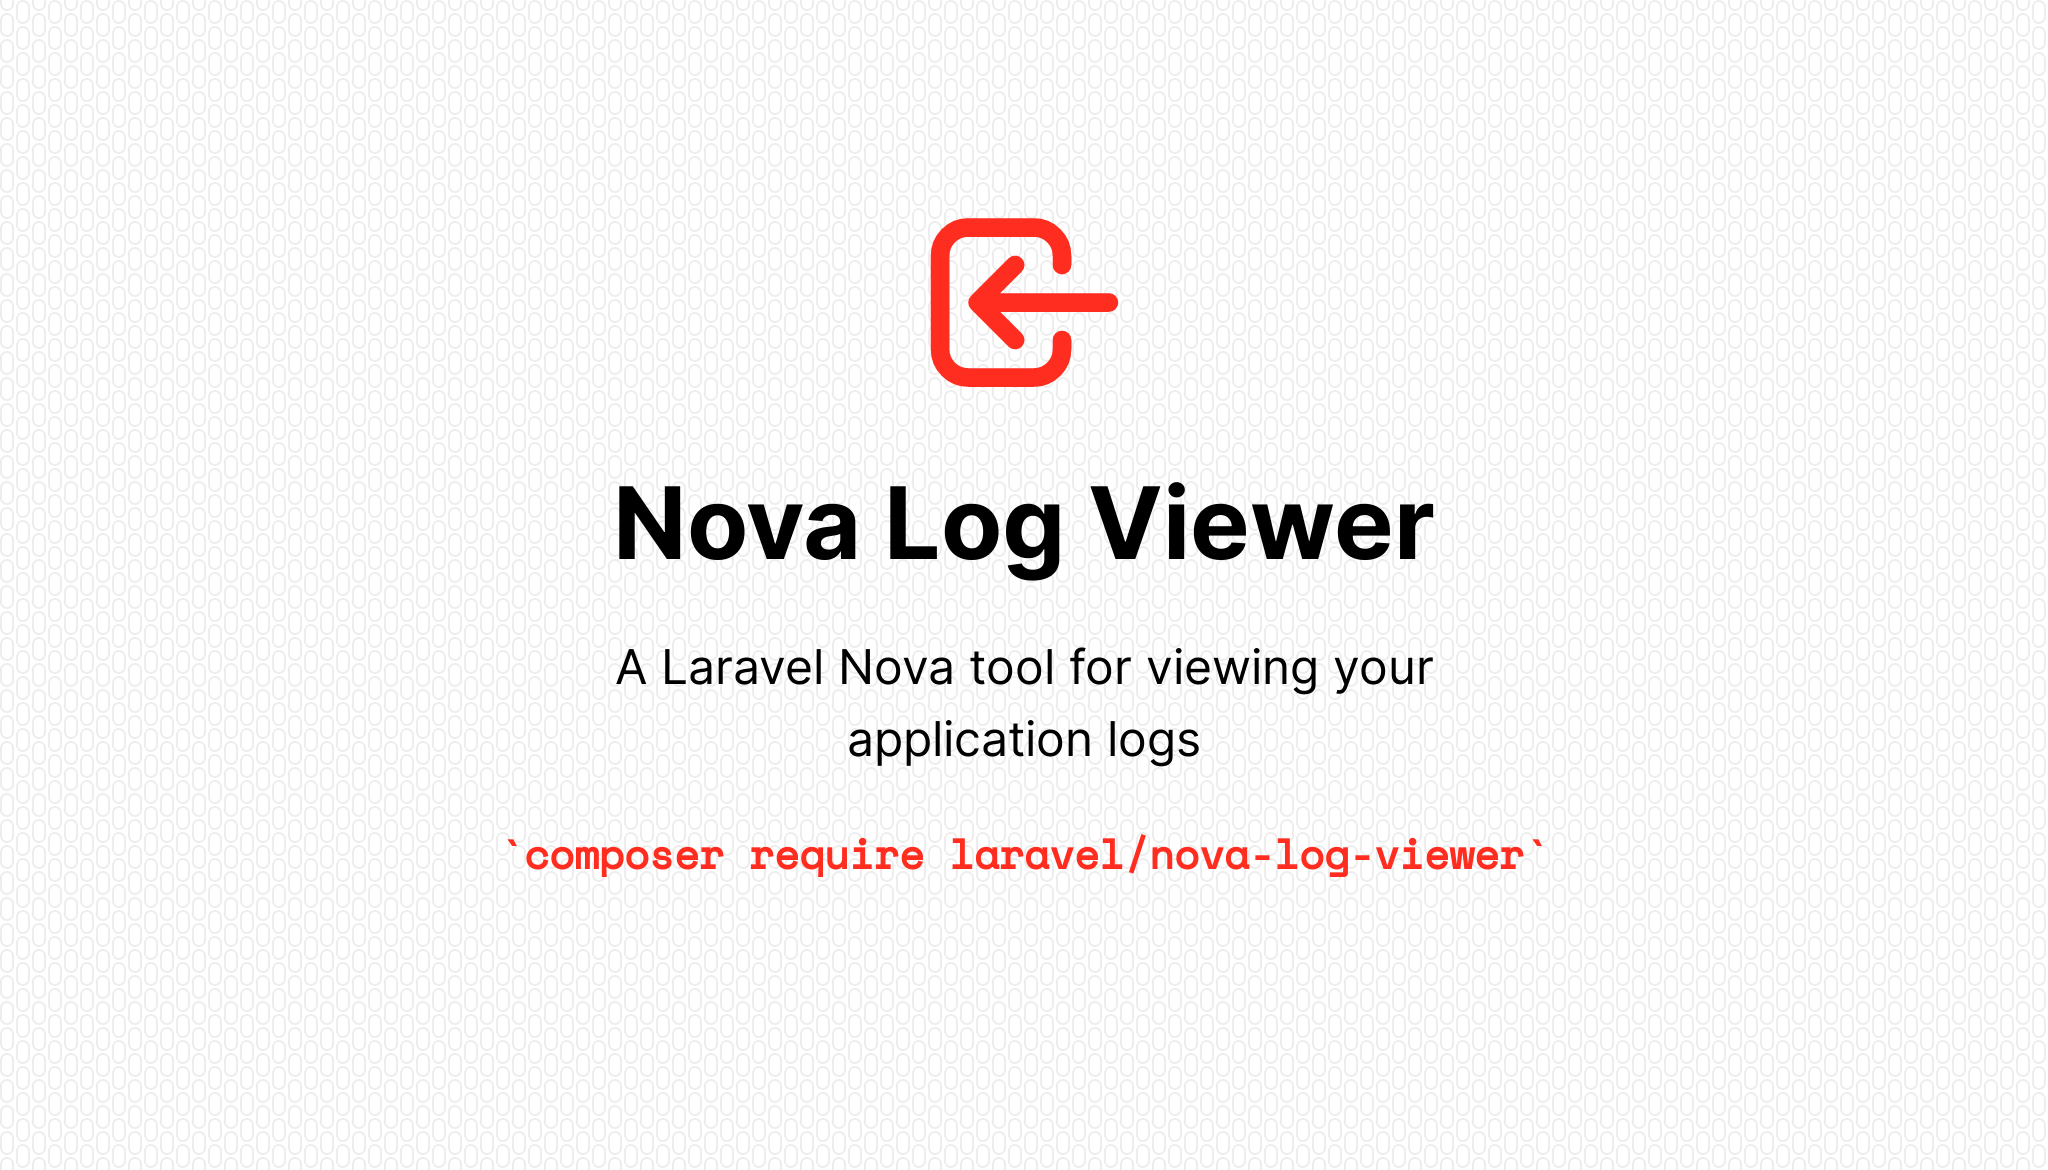 Nova Log Viewer